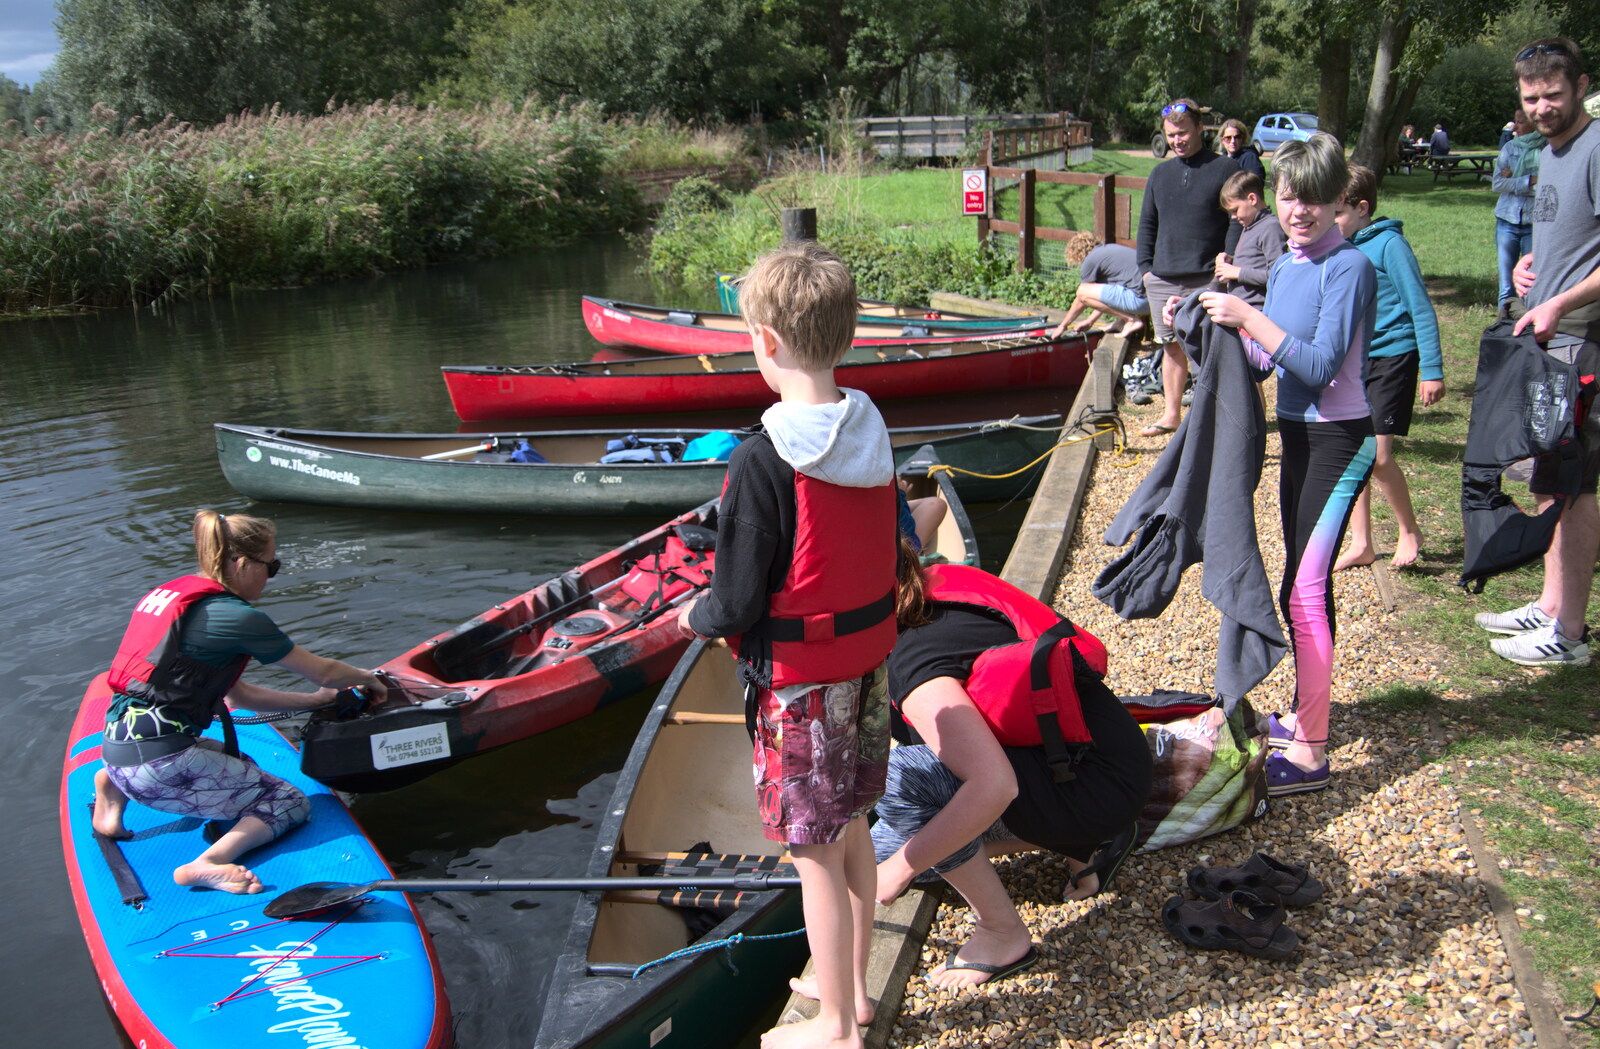 We moor up at Geldeston Lock from Camping at Three Rivers, Geldeston, Norfolk - 5th September 2020